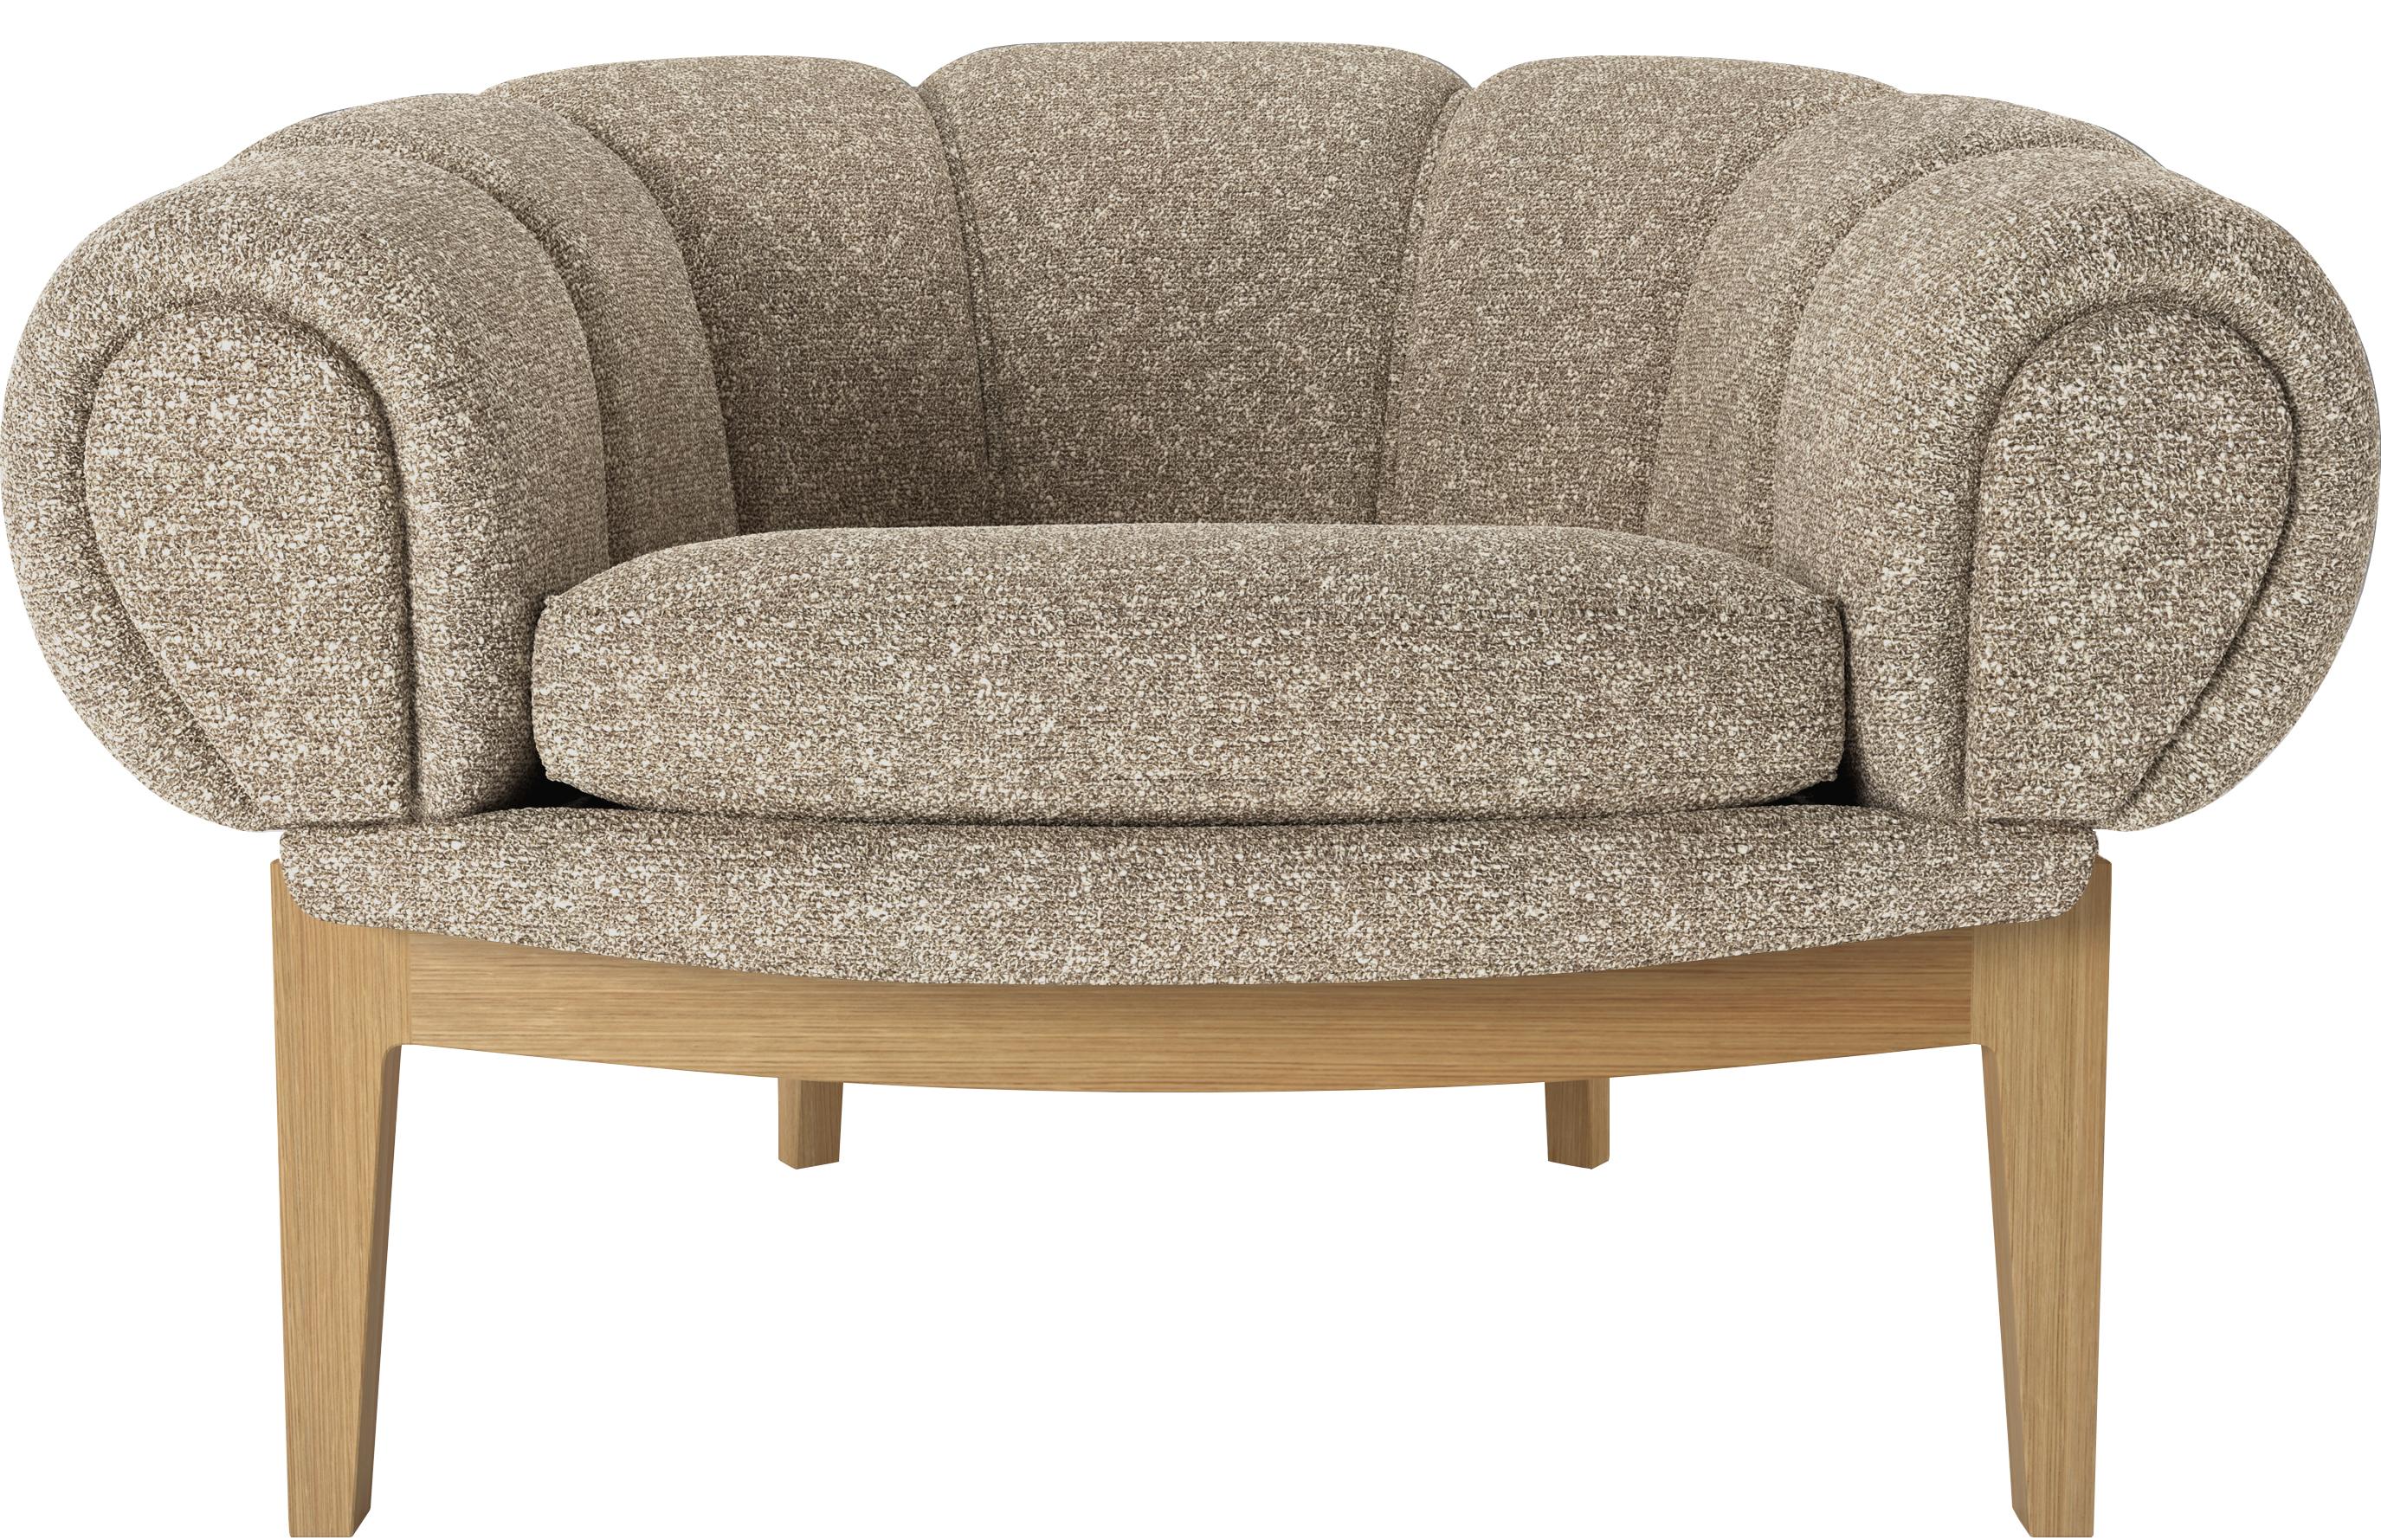 Danish Fabric 'Croissant' Lounge Chair by Illum Wikkelsø for Gubi For Sale